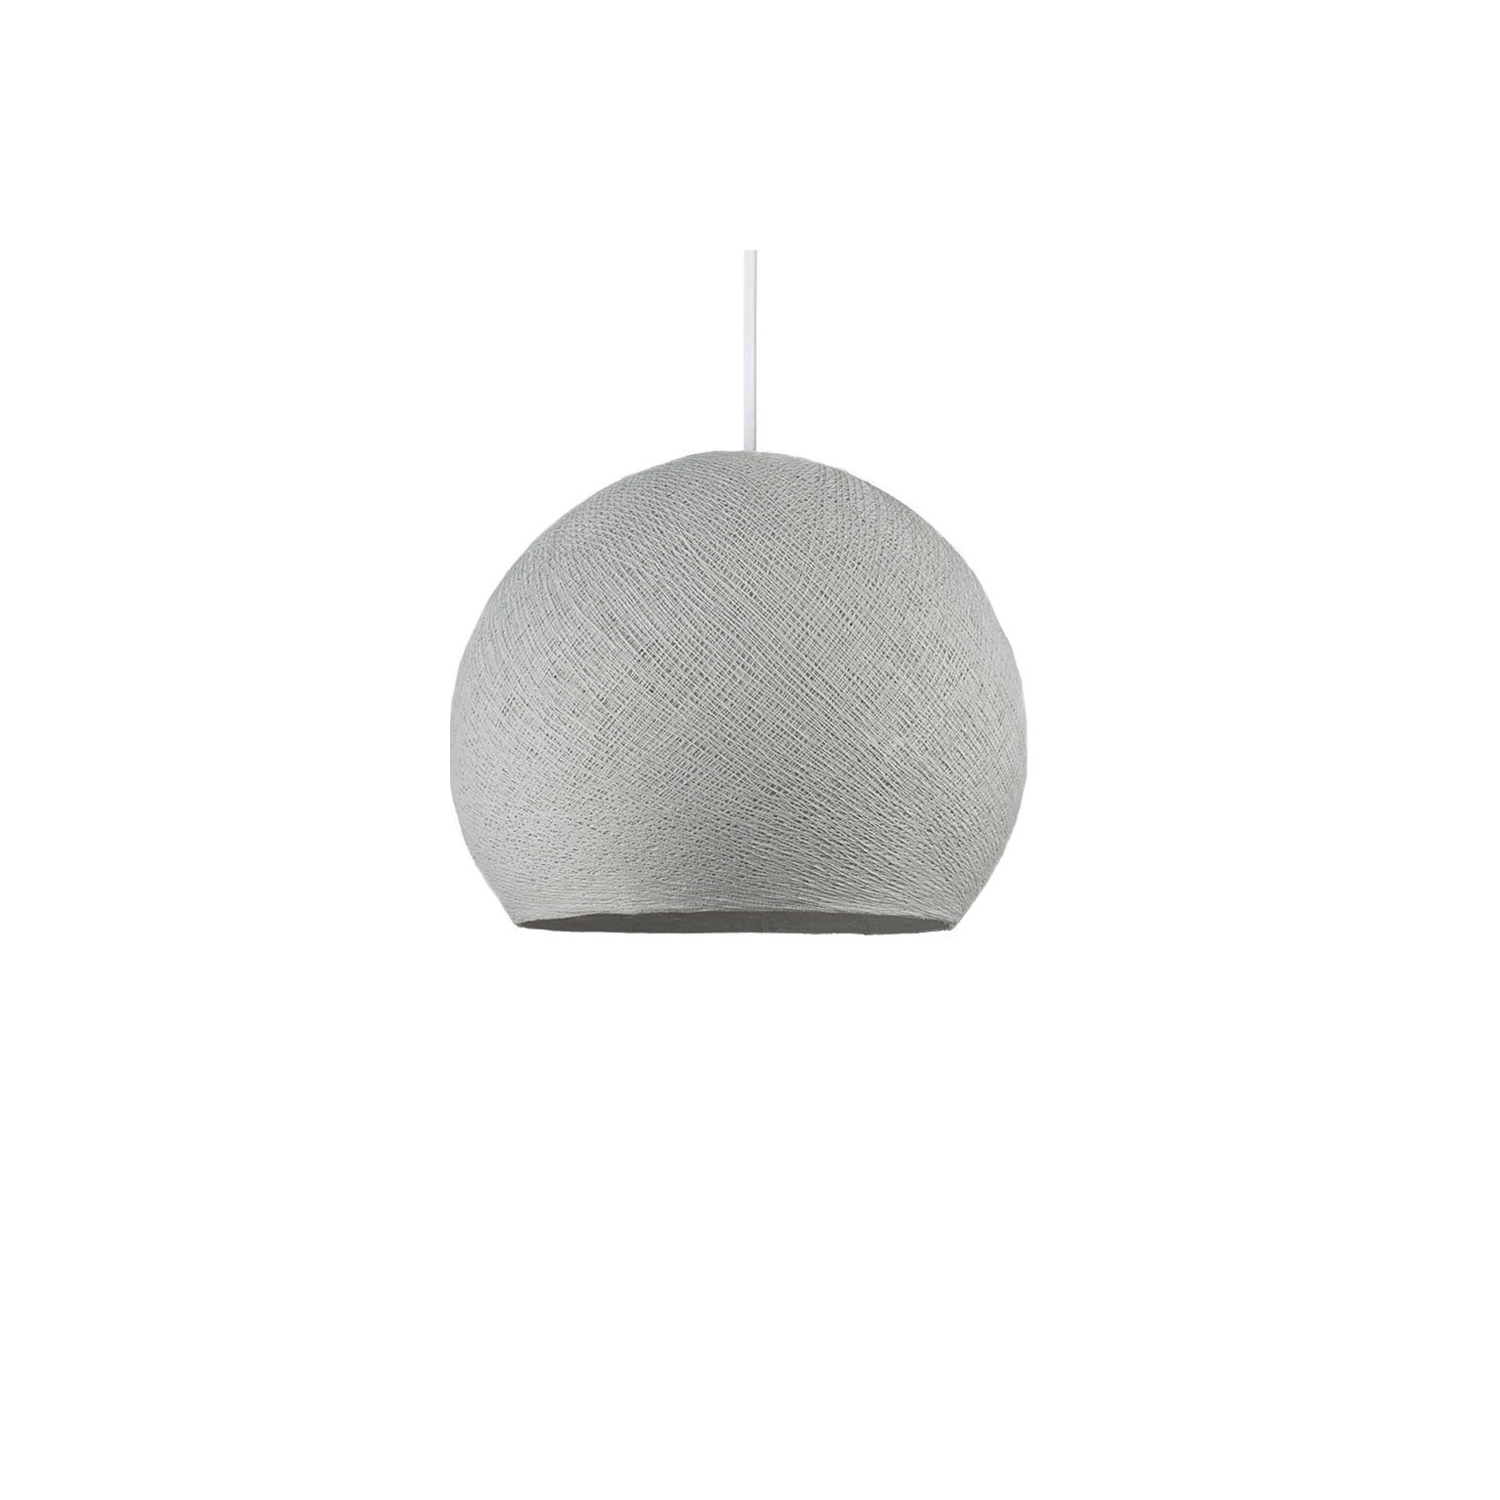 Dome XS lampshade made of polyester fiber, 25 cm diameter - 100% handmade